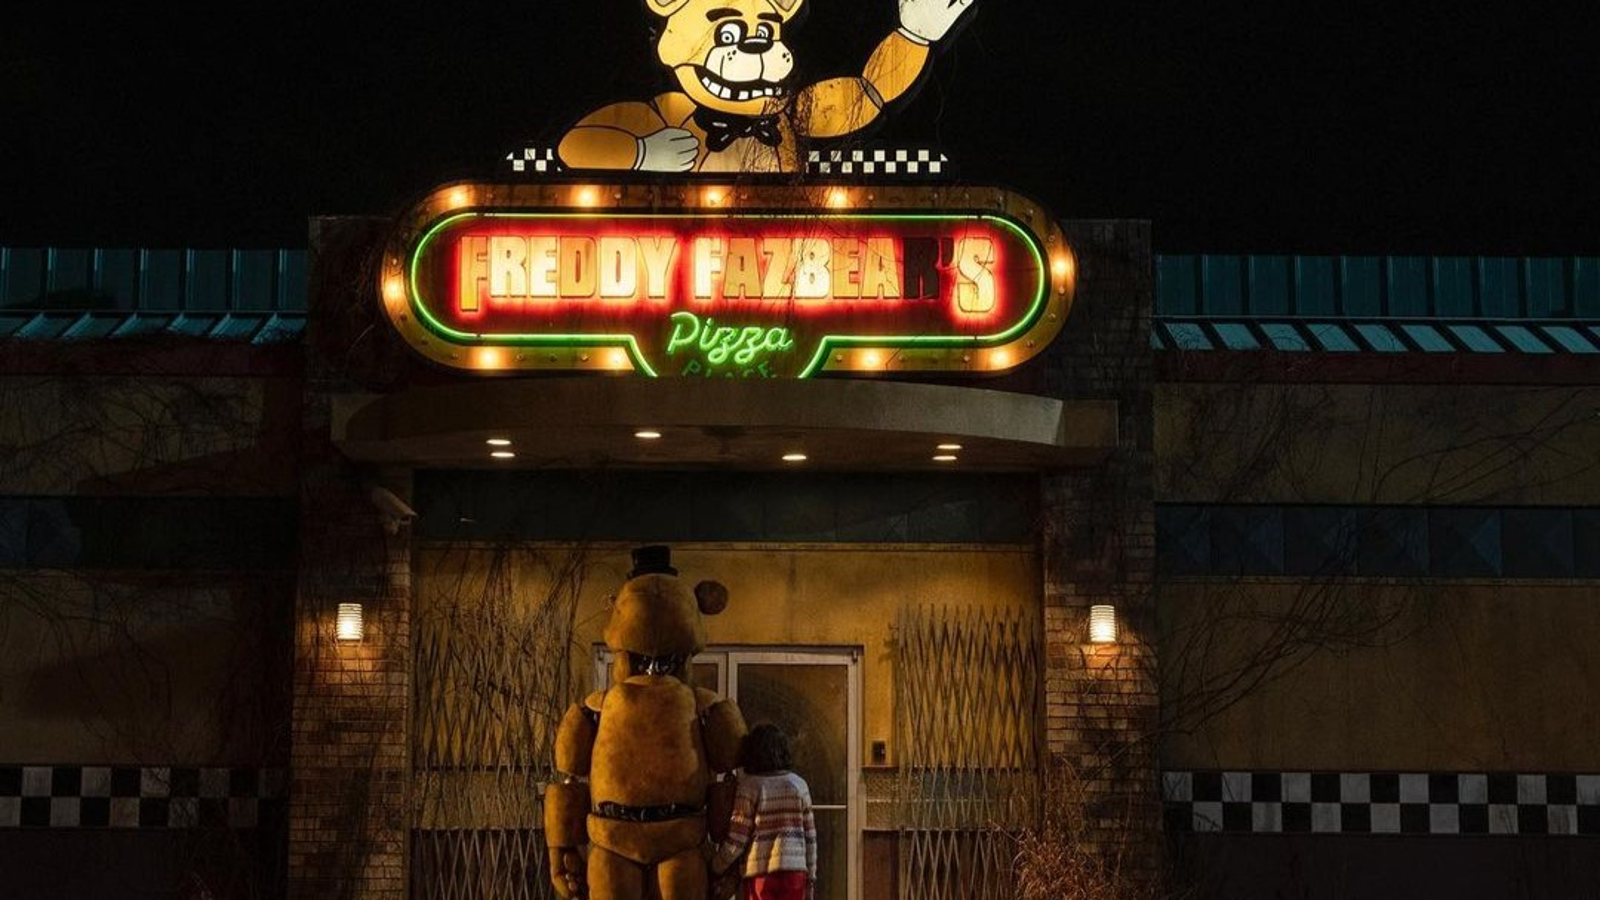 Scott Cawthon Announces Five Nights at Freddy's Movie Has a Script